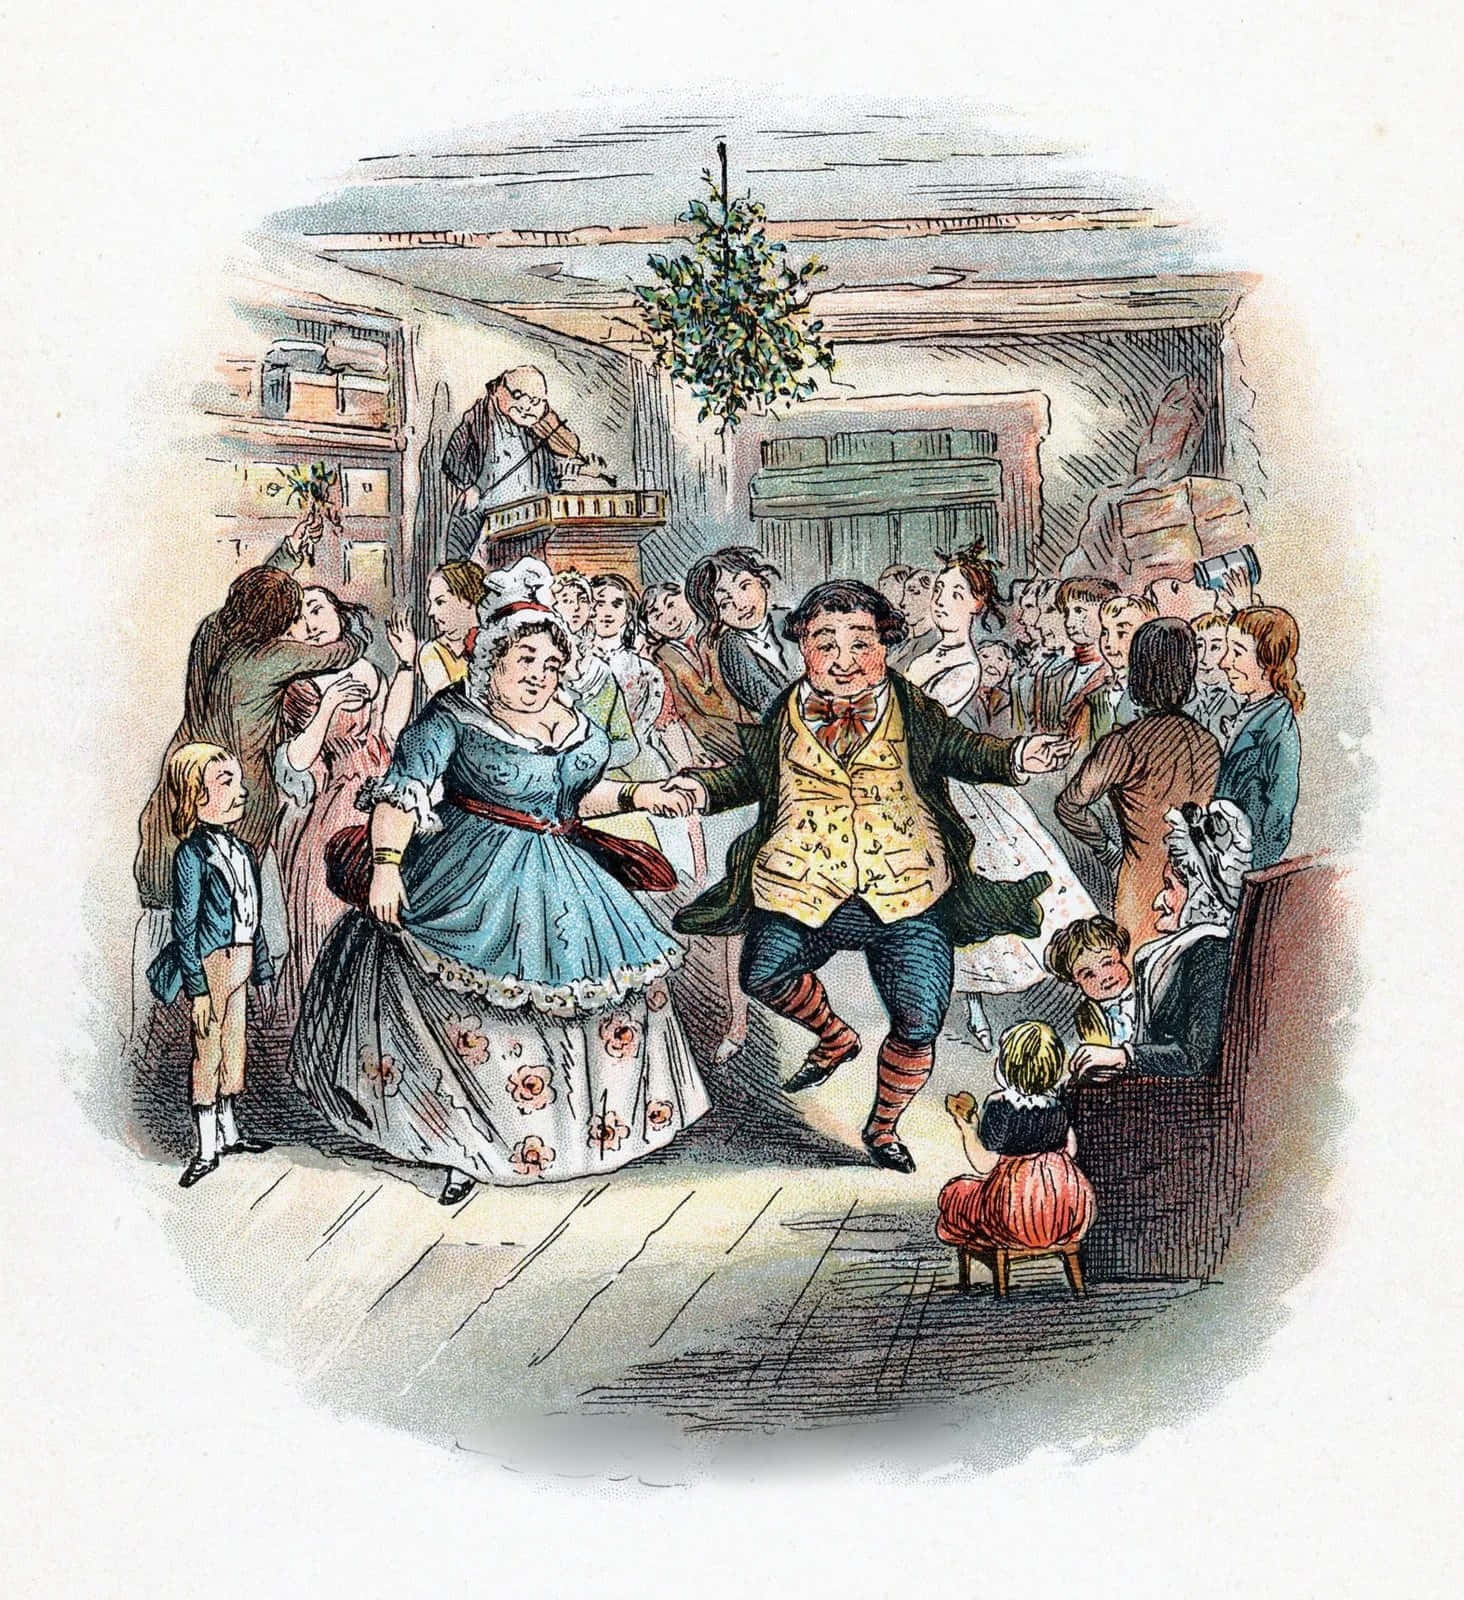 A festive portrait of Ebenezer Scrooge from A Christmas Carol